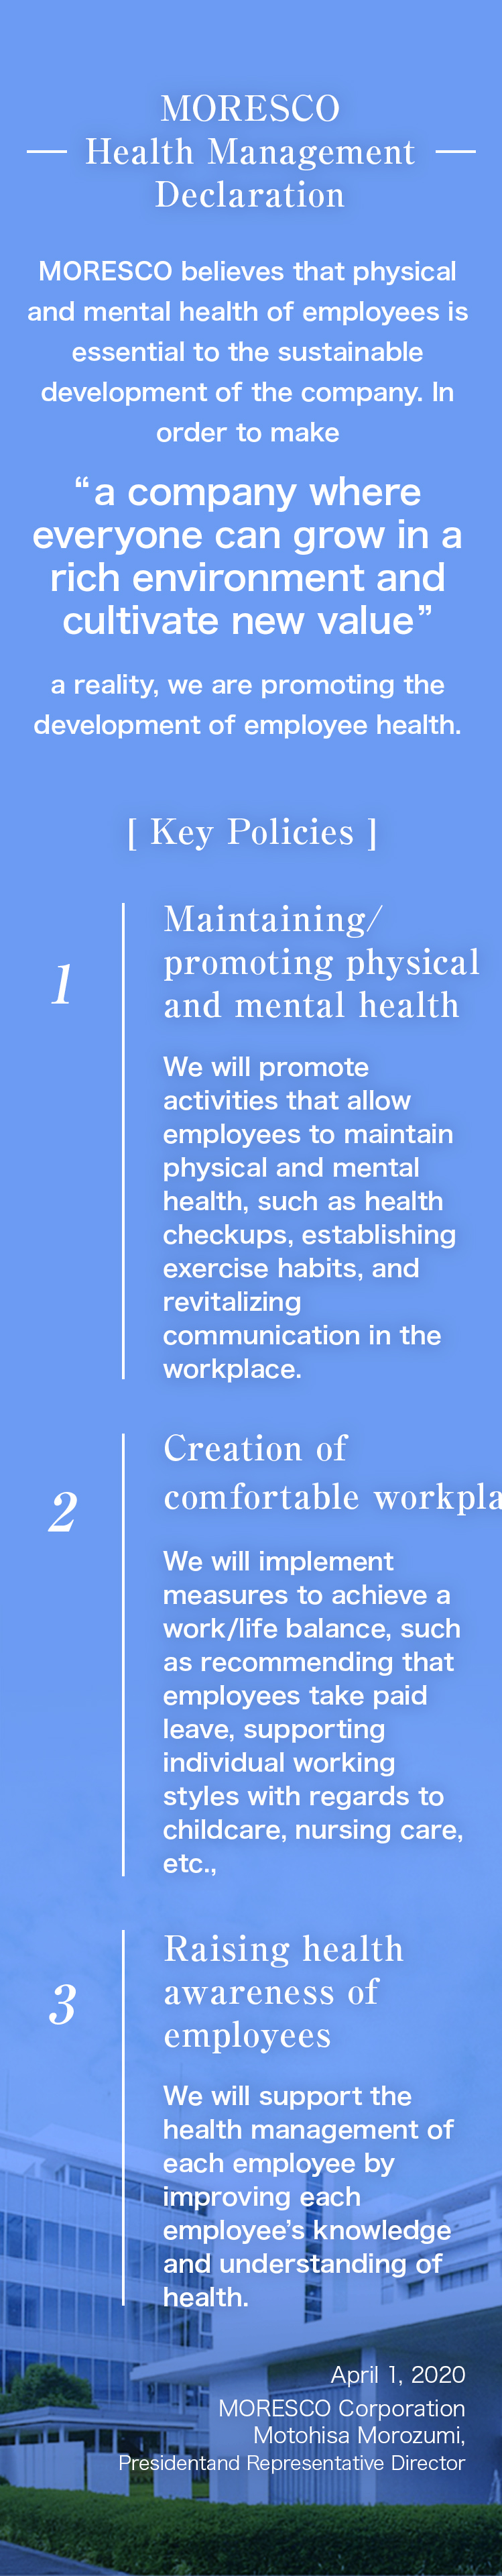 MORESCO Health Management Declaration